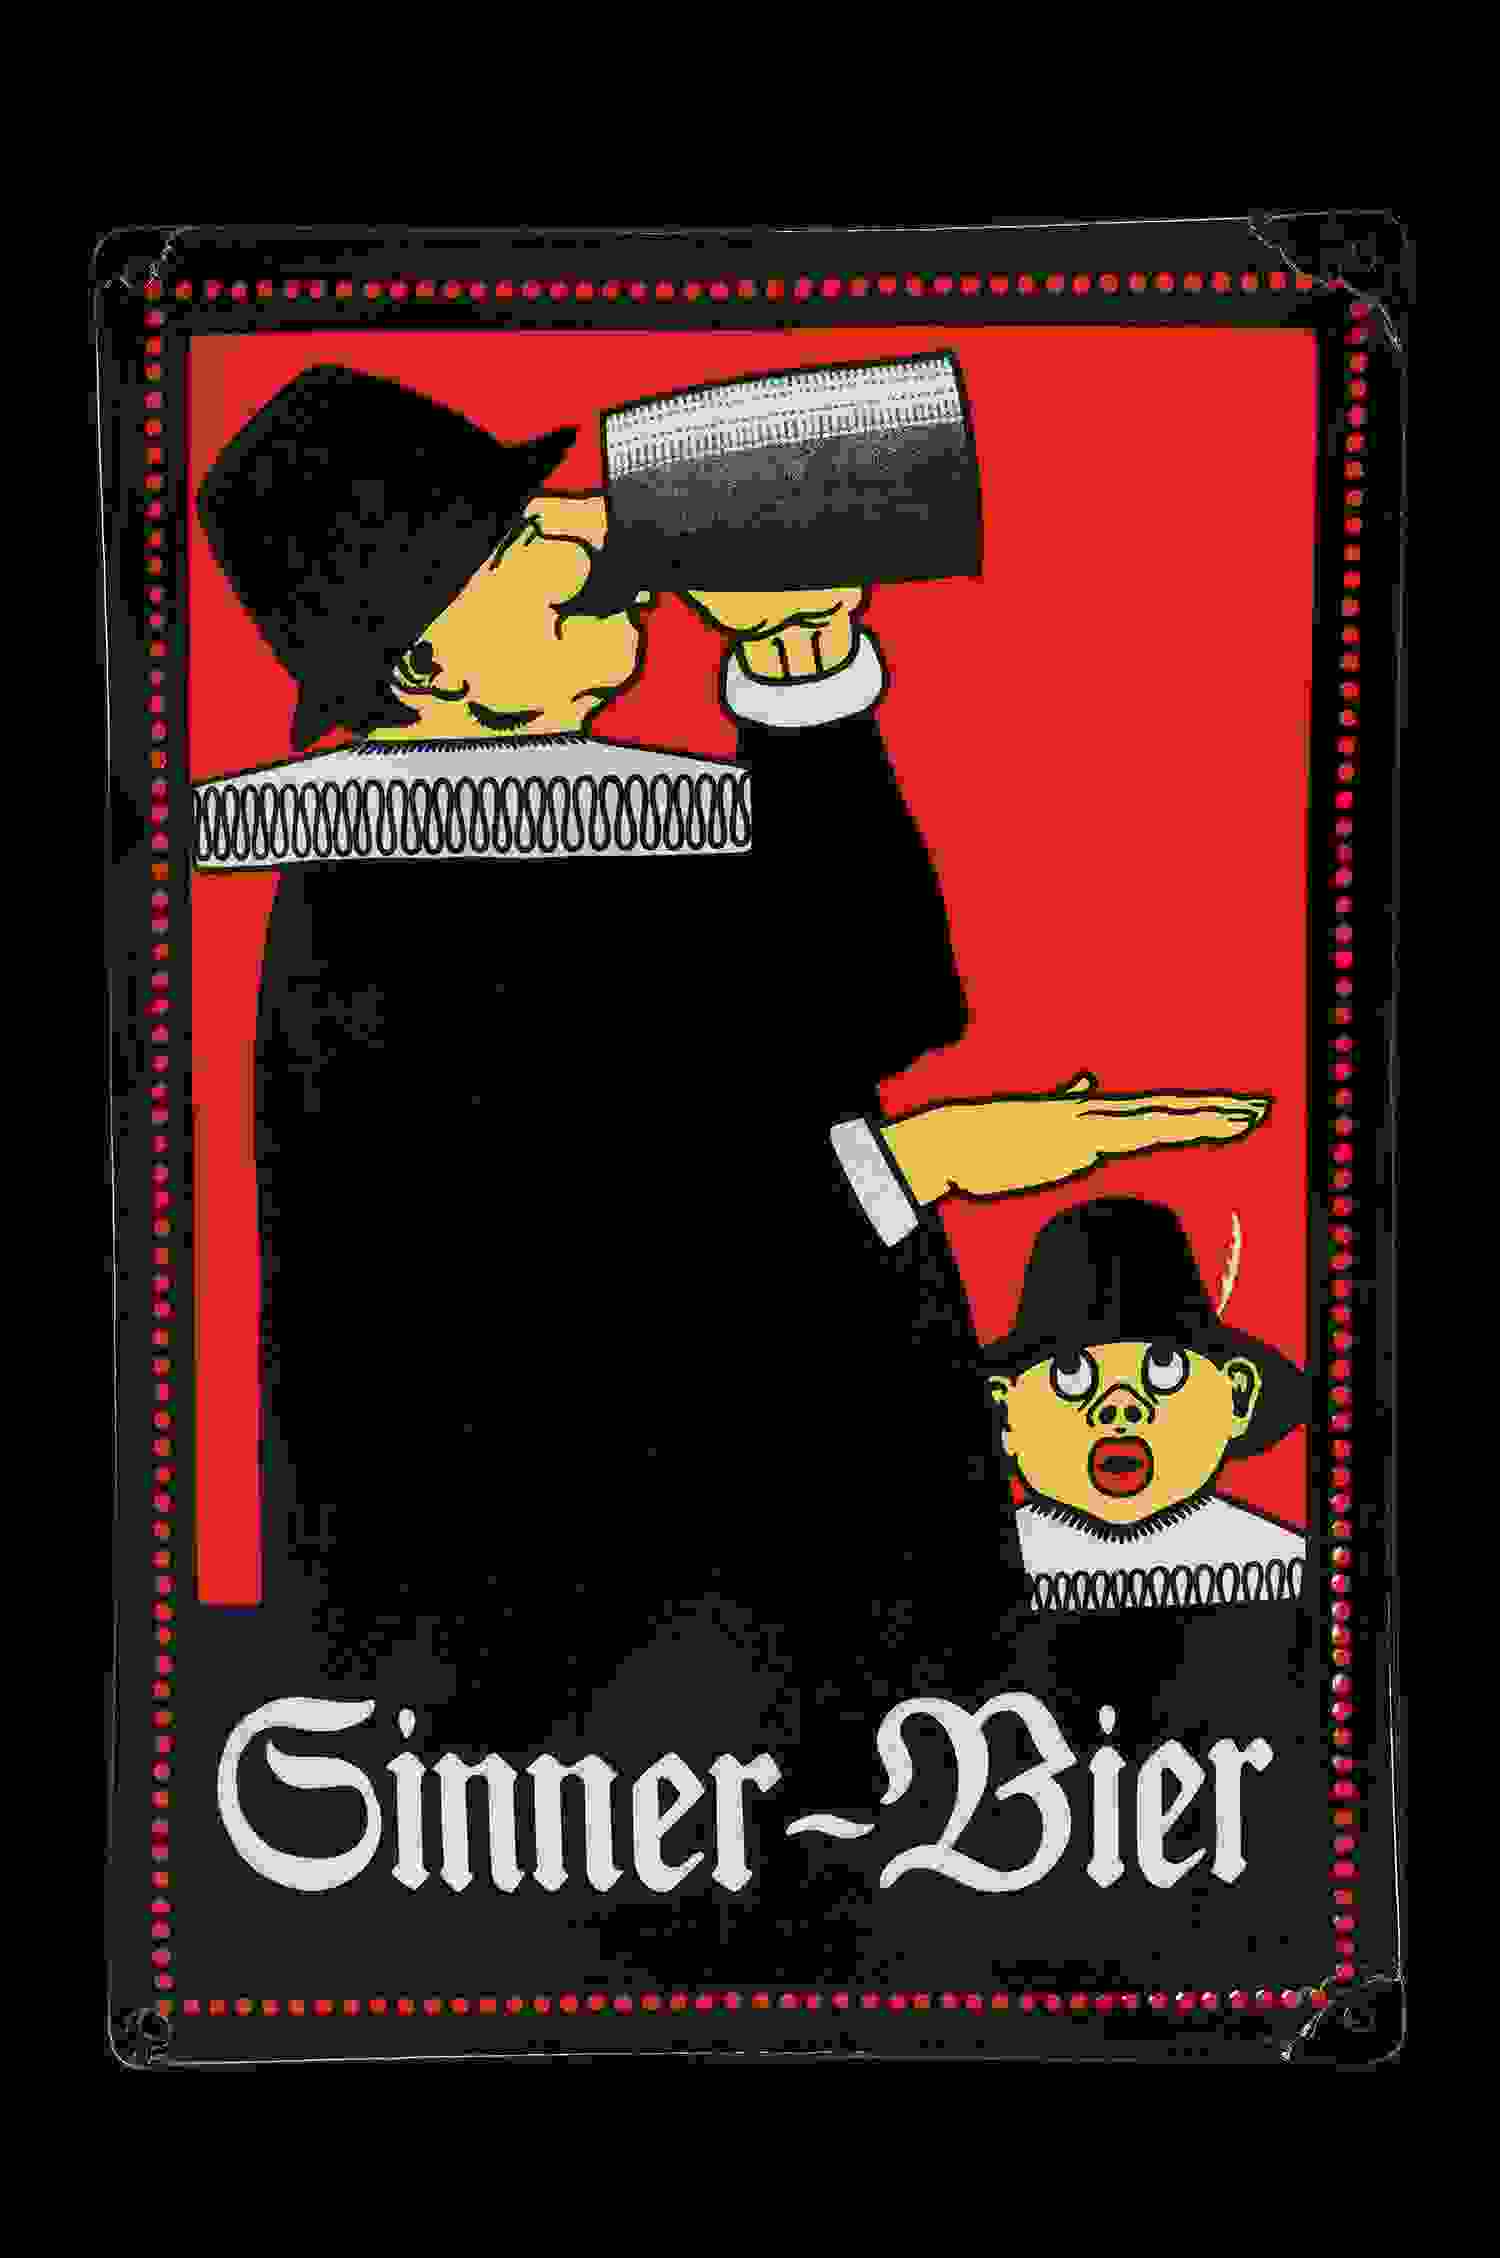 Sinner-Bier 